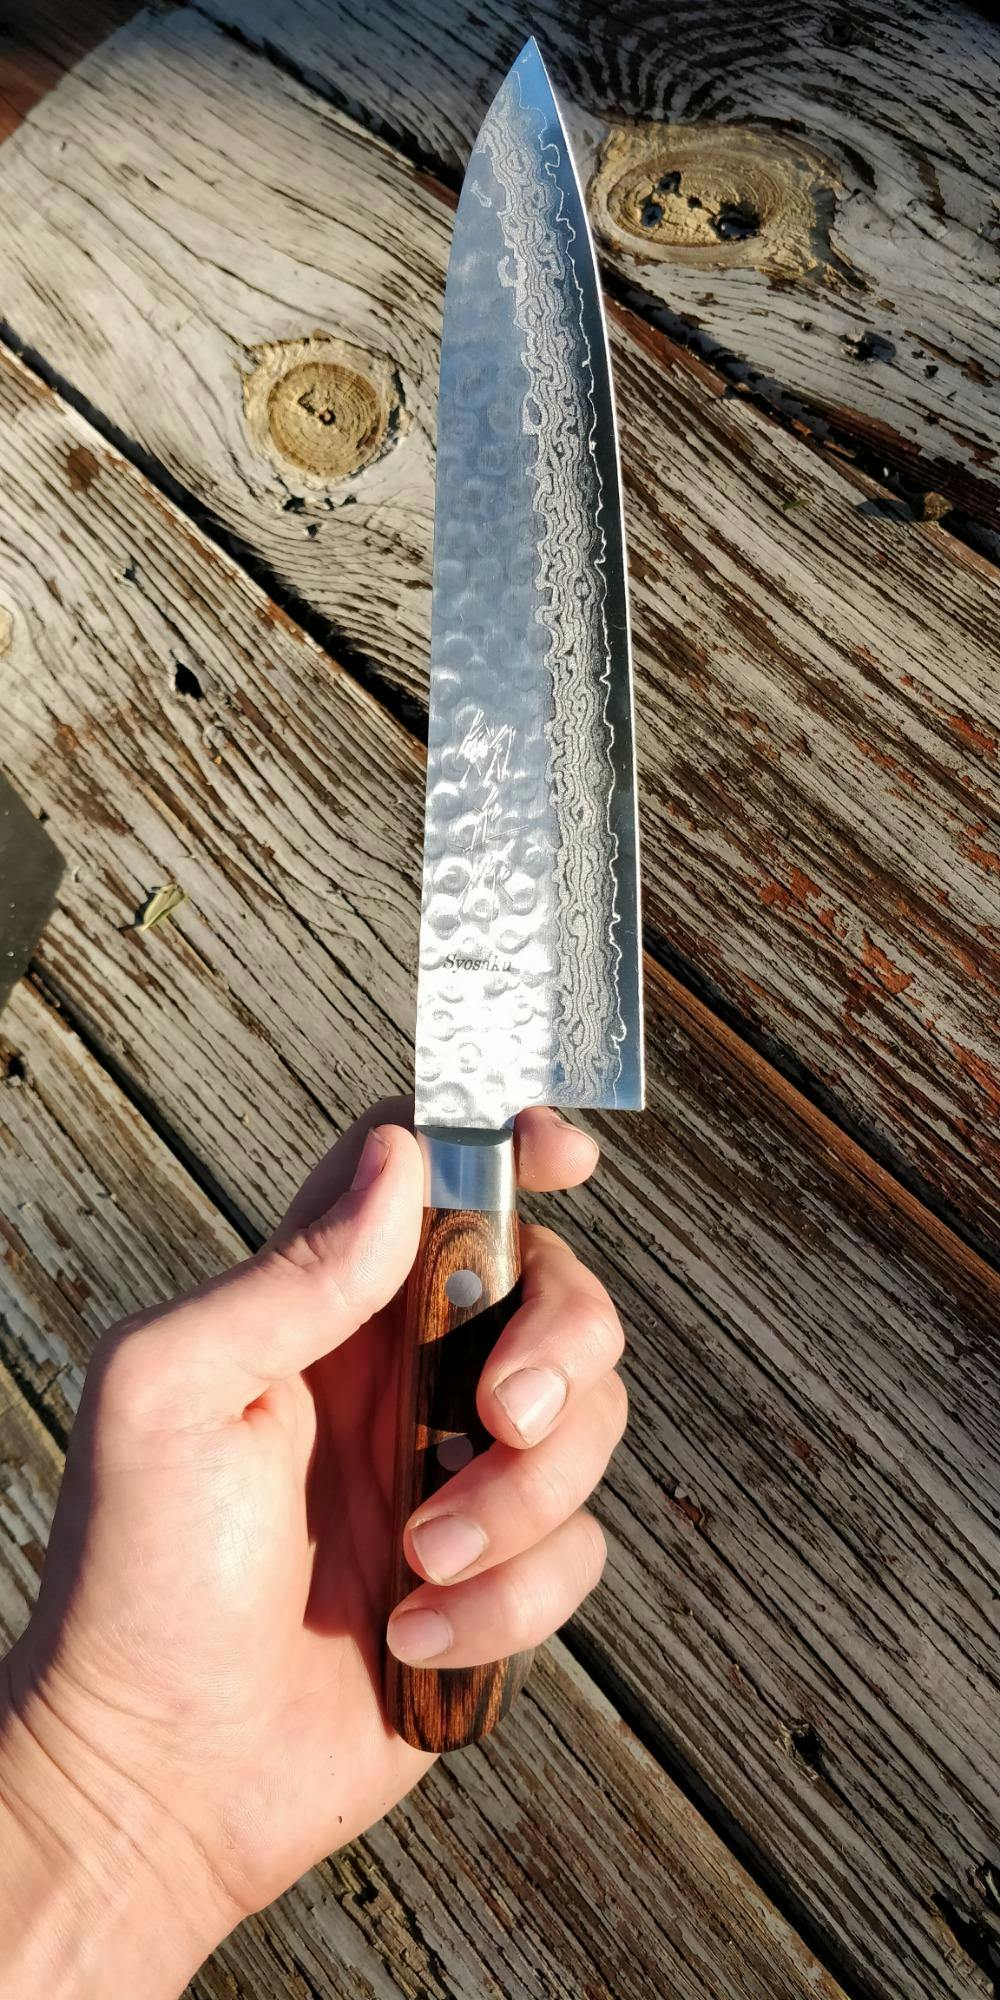 Syosaku Japanese Petty Best Sharp Kitchen Chef Knife Hammered Damascus VG-10 46 Layer Octagonal Magnolia Wood Handle, 6-Inch (150mm)